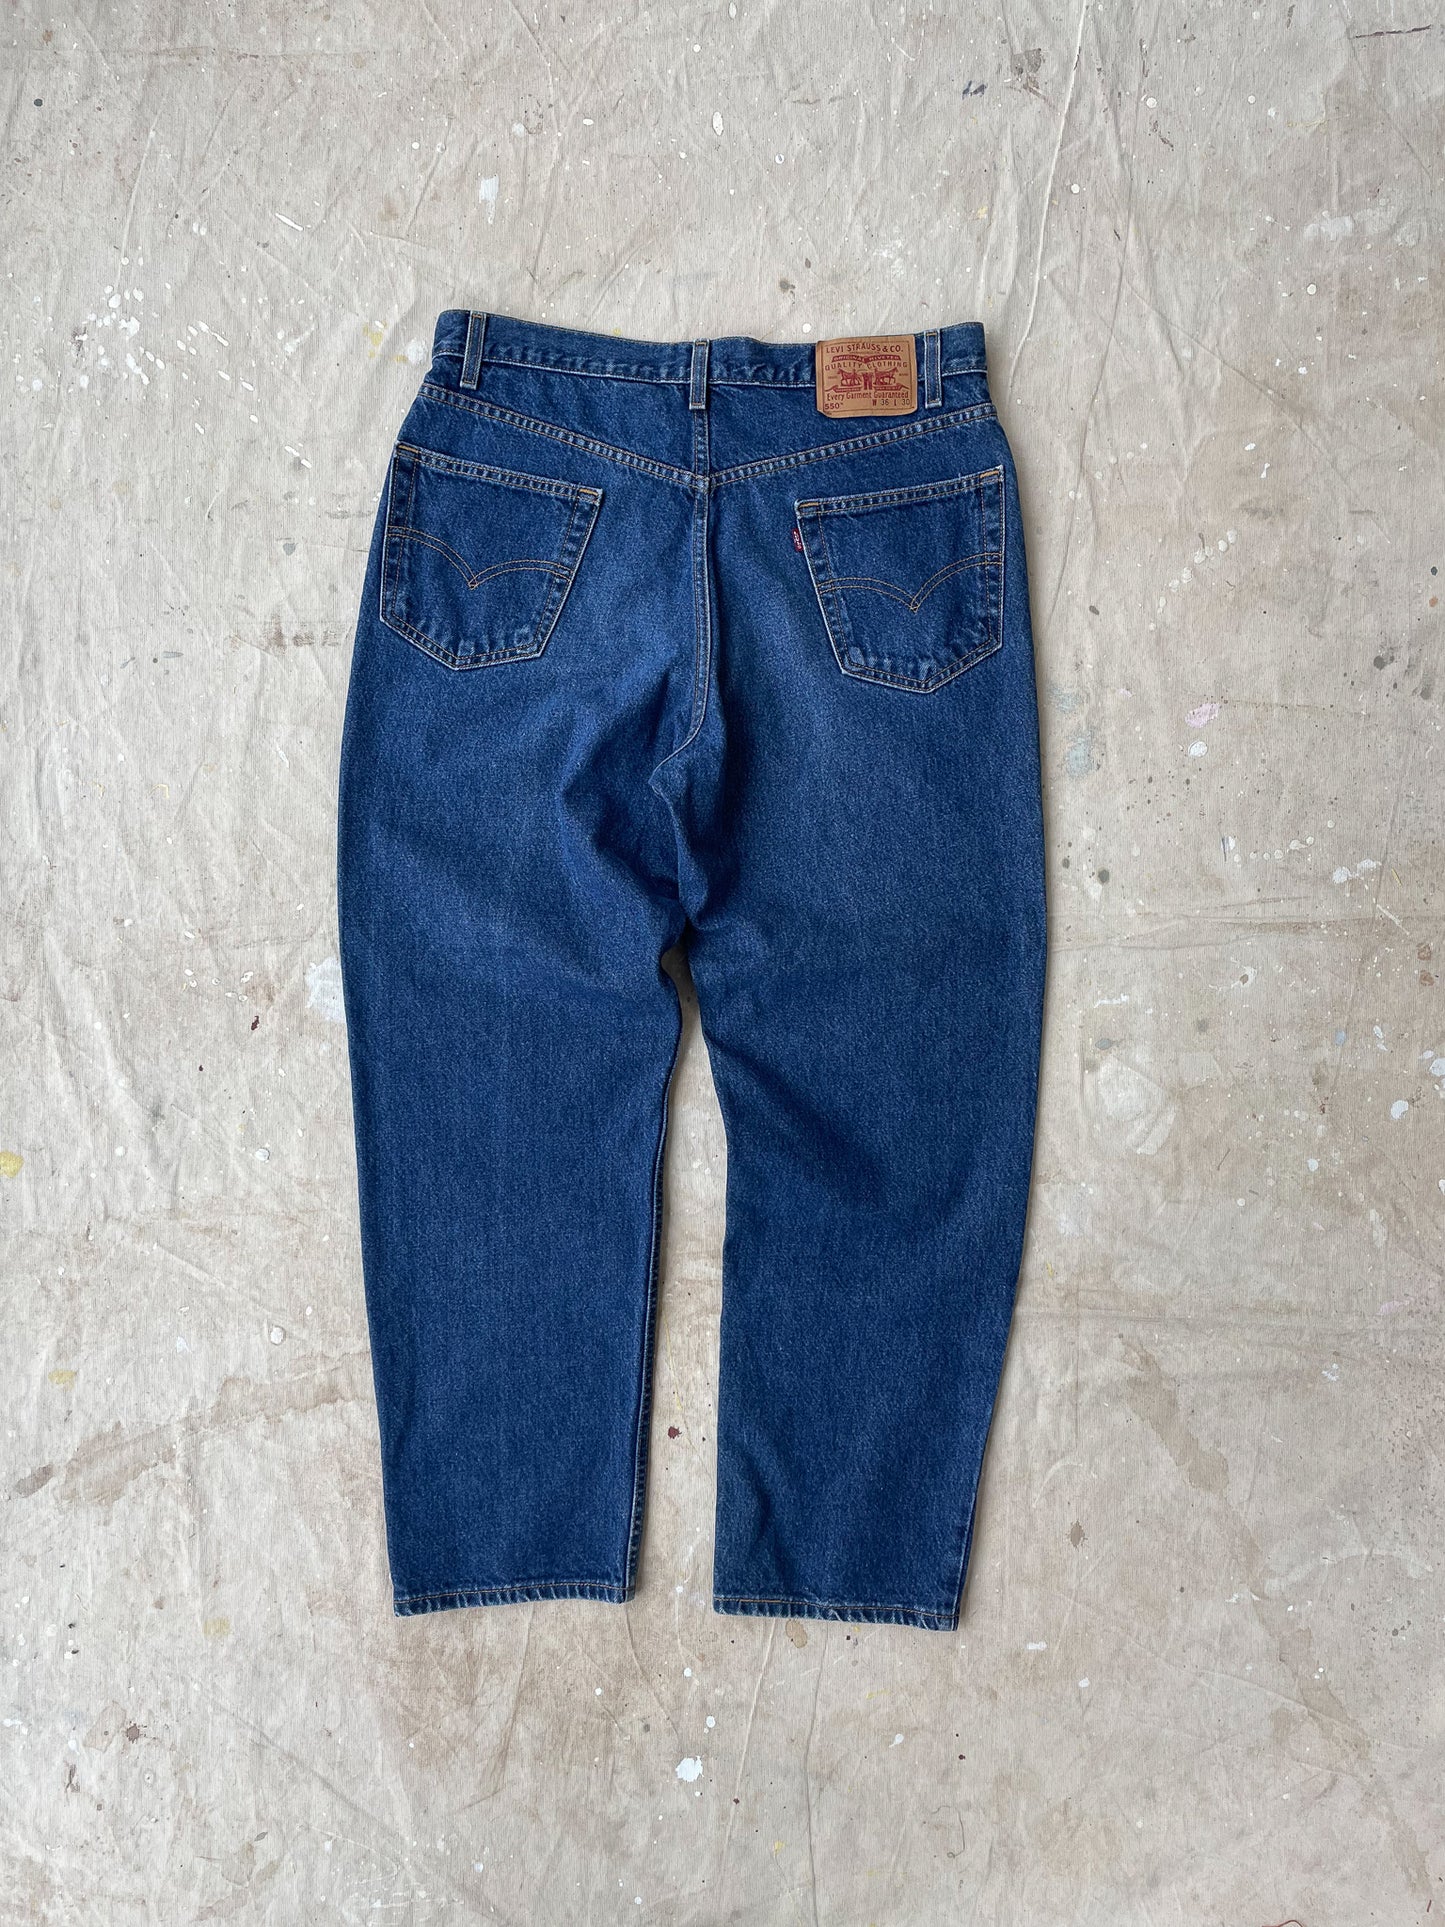 90's Levi's 550 Medium Wash Jeans—[36x30]